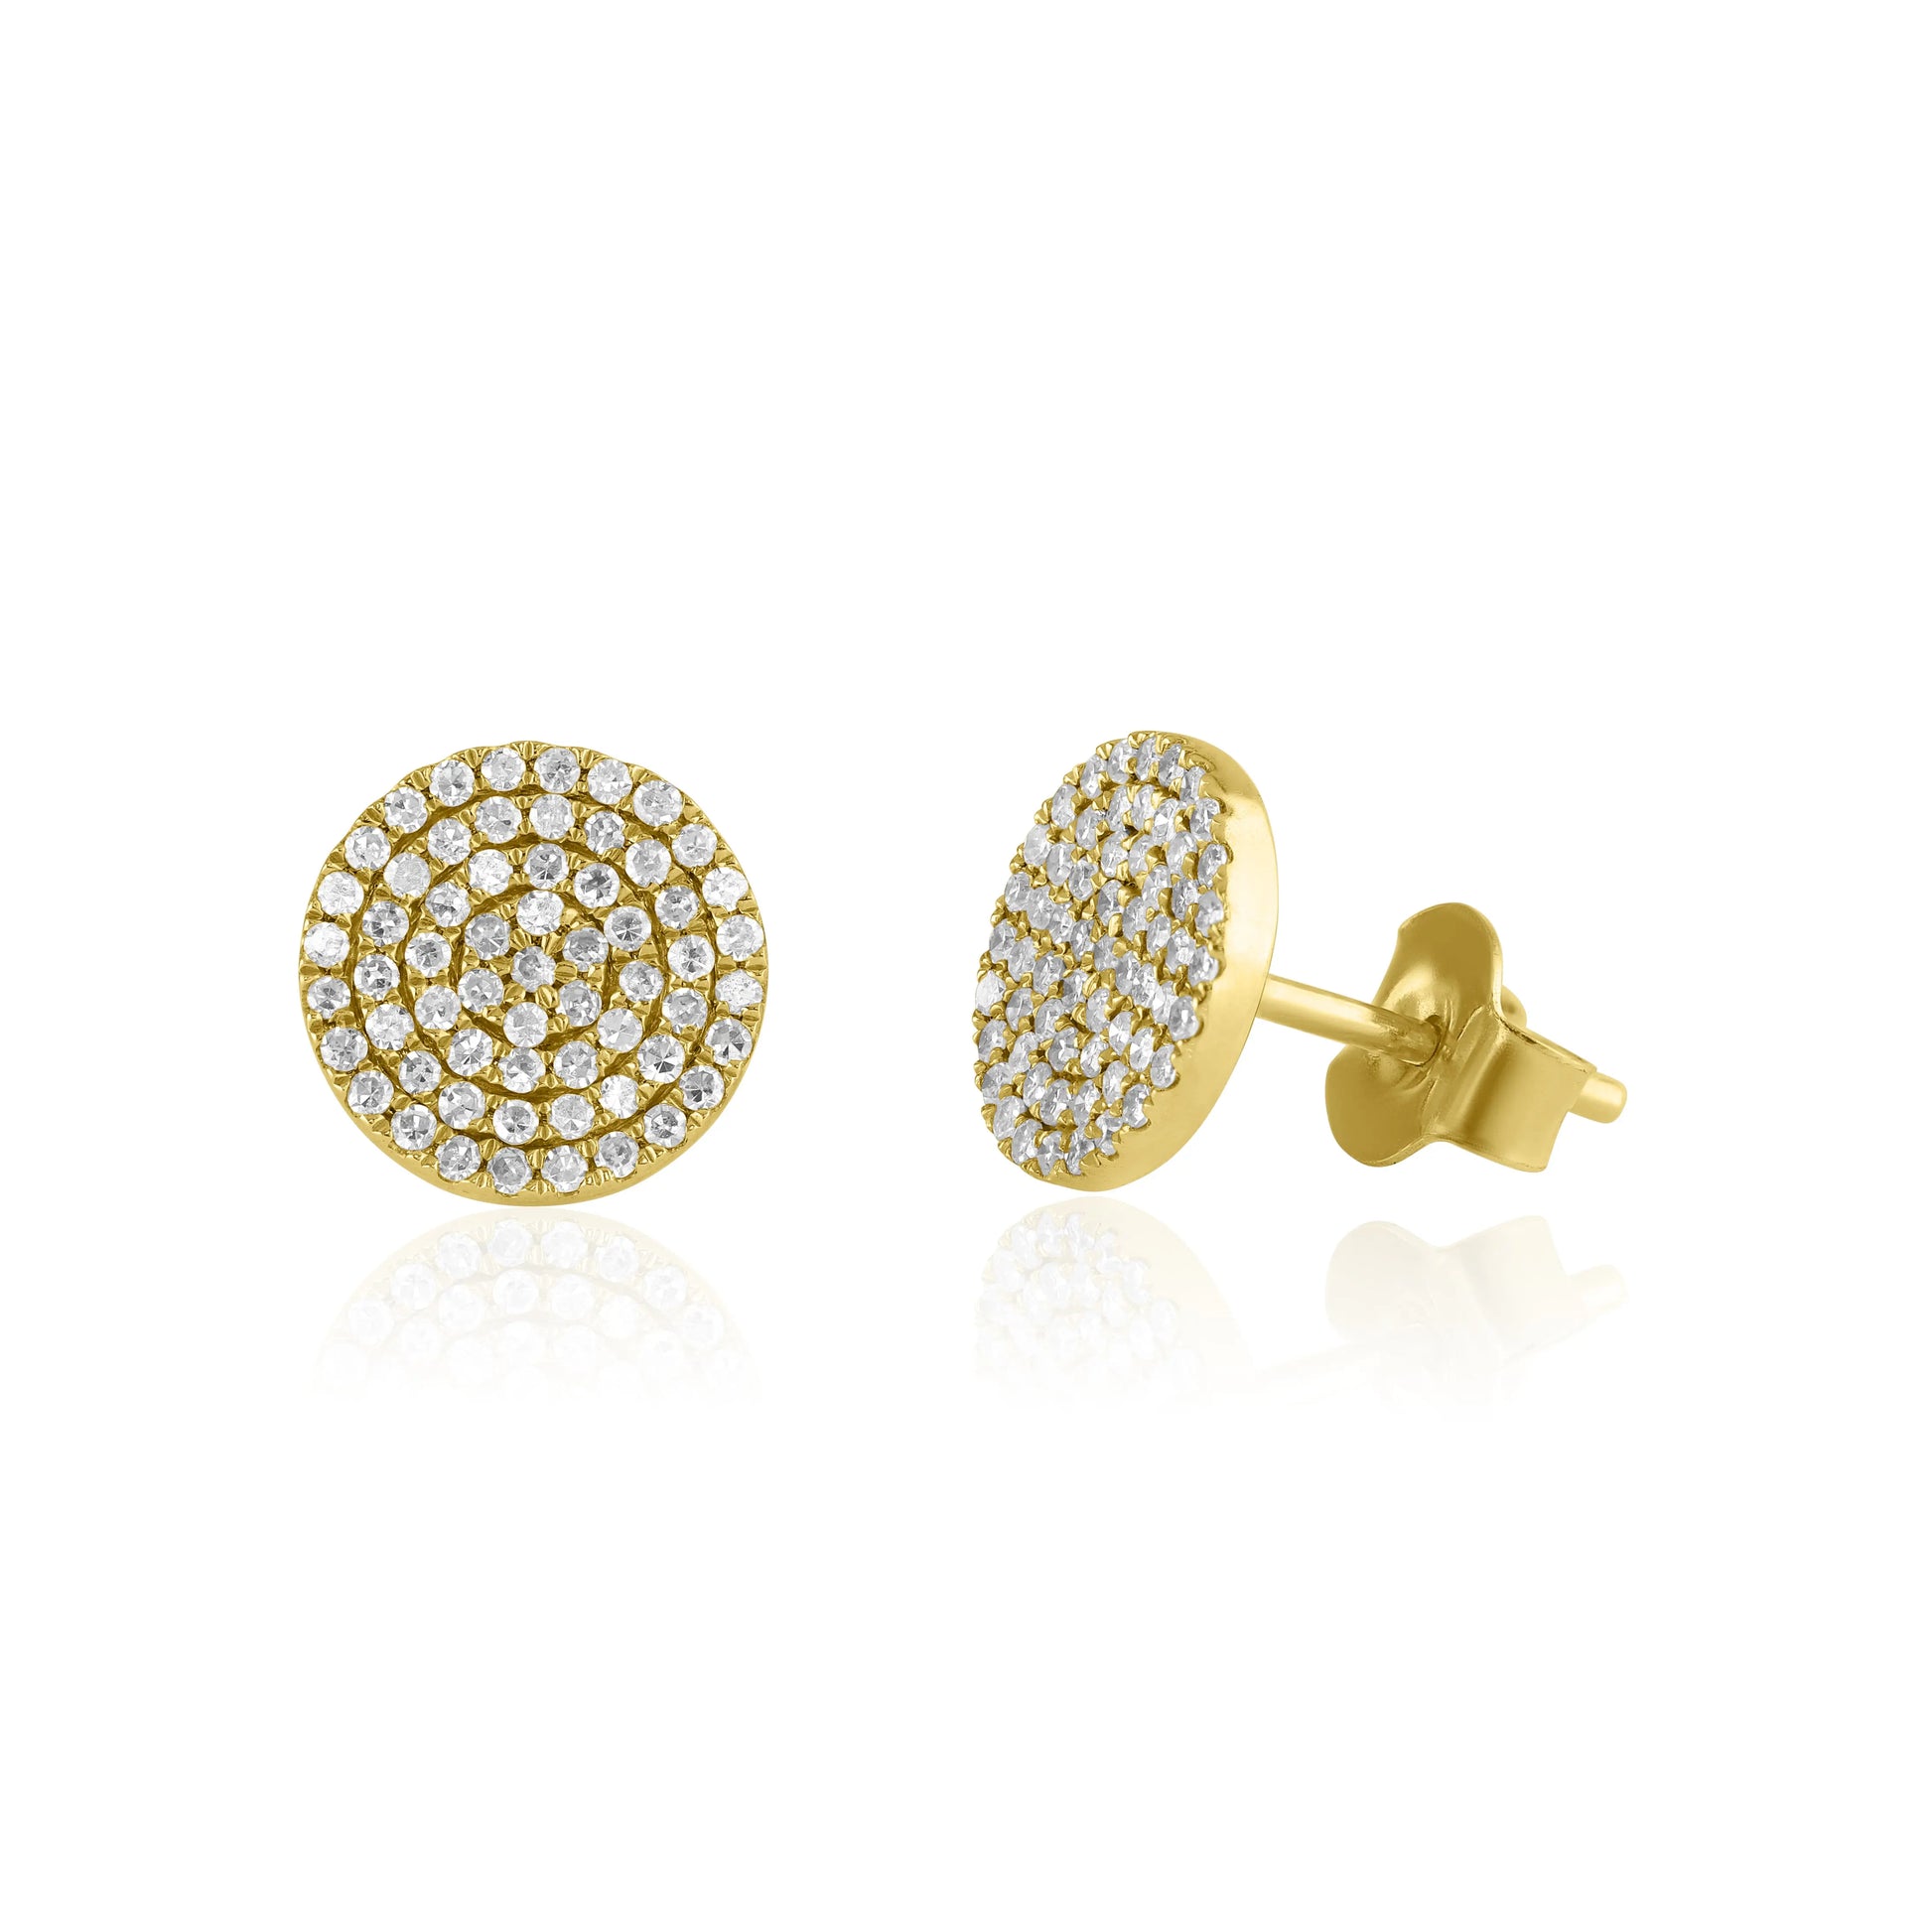 White Gold Earrings Round Diamond Cluster Stud Earrings dansonjewelers Danson Jewelers 